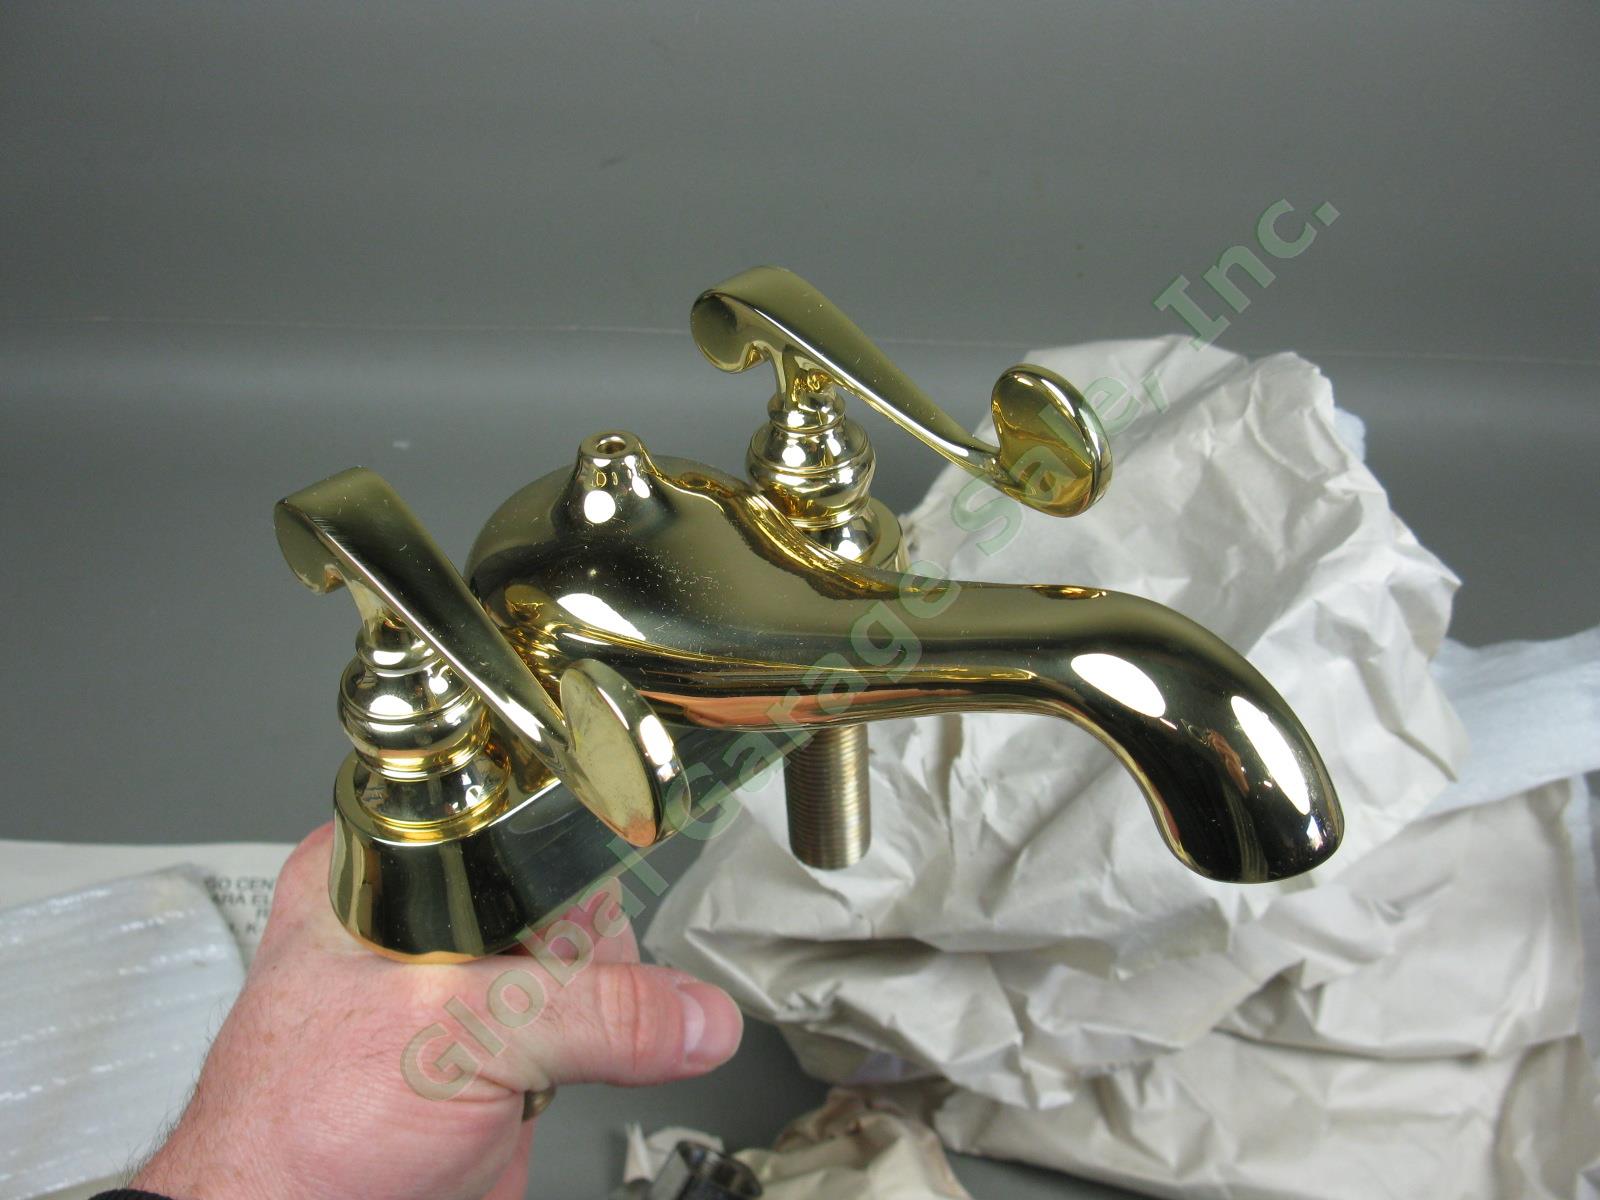 New Kohler 16100-4-PB Revival Centerset Lavatory Bathroom Faucet Polished Brass 2